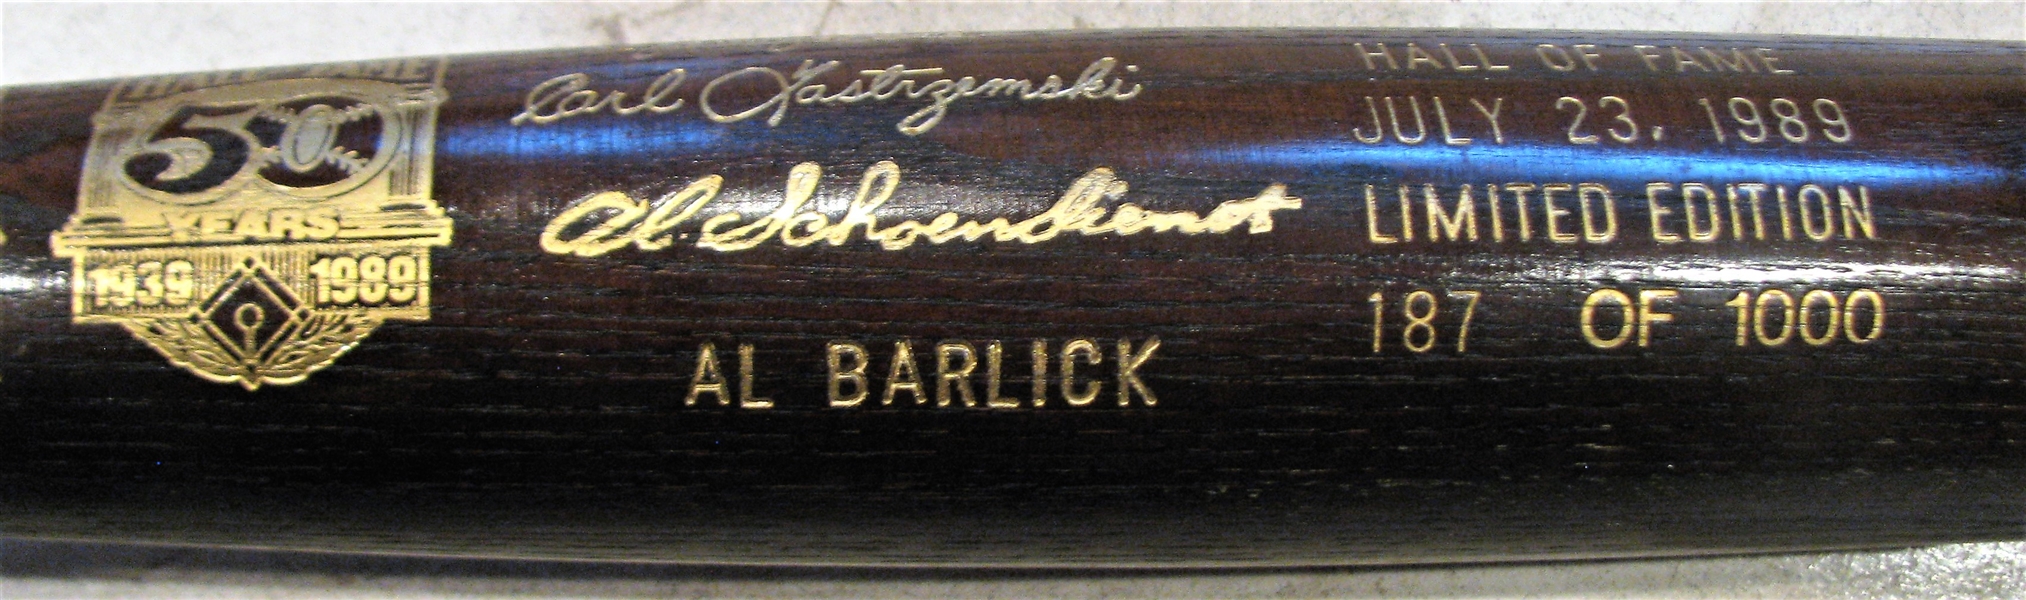 1989 BASEBALL HOF BAT w/BENCH - YASTRZEMSKI -BARLICK - SCHOENDIENST 